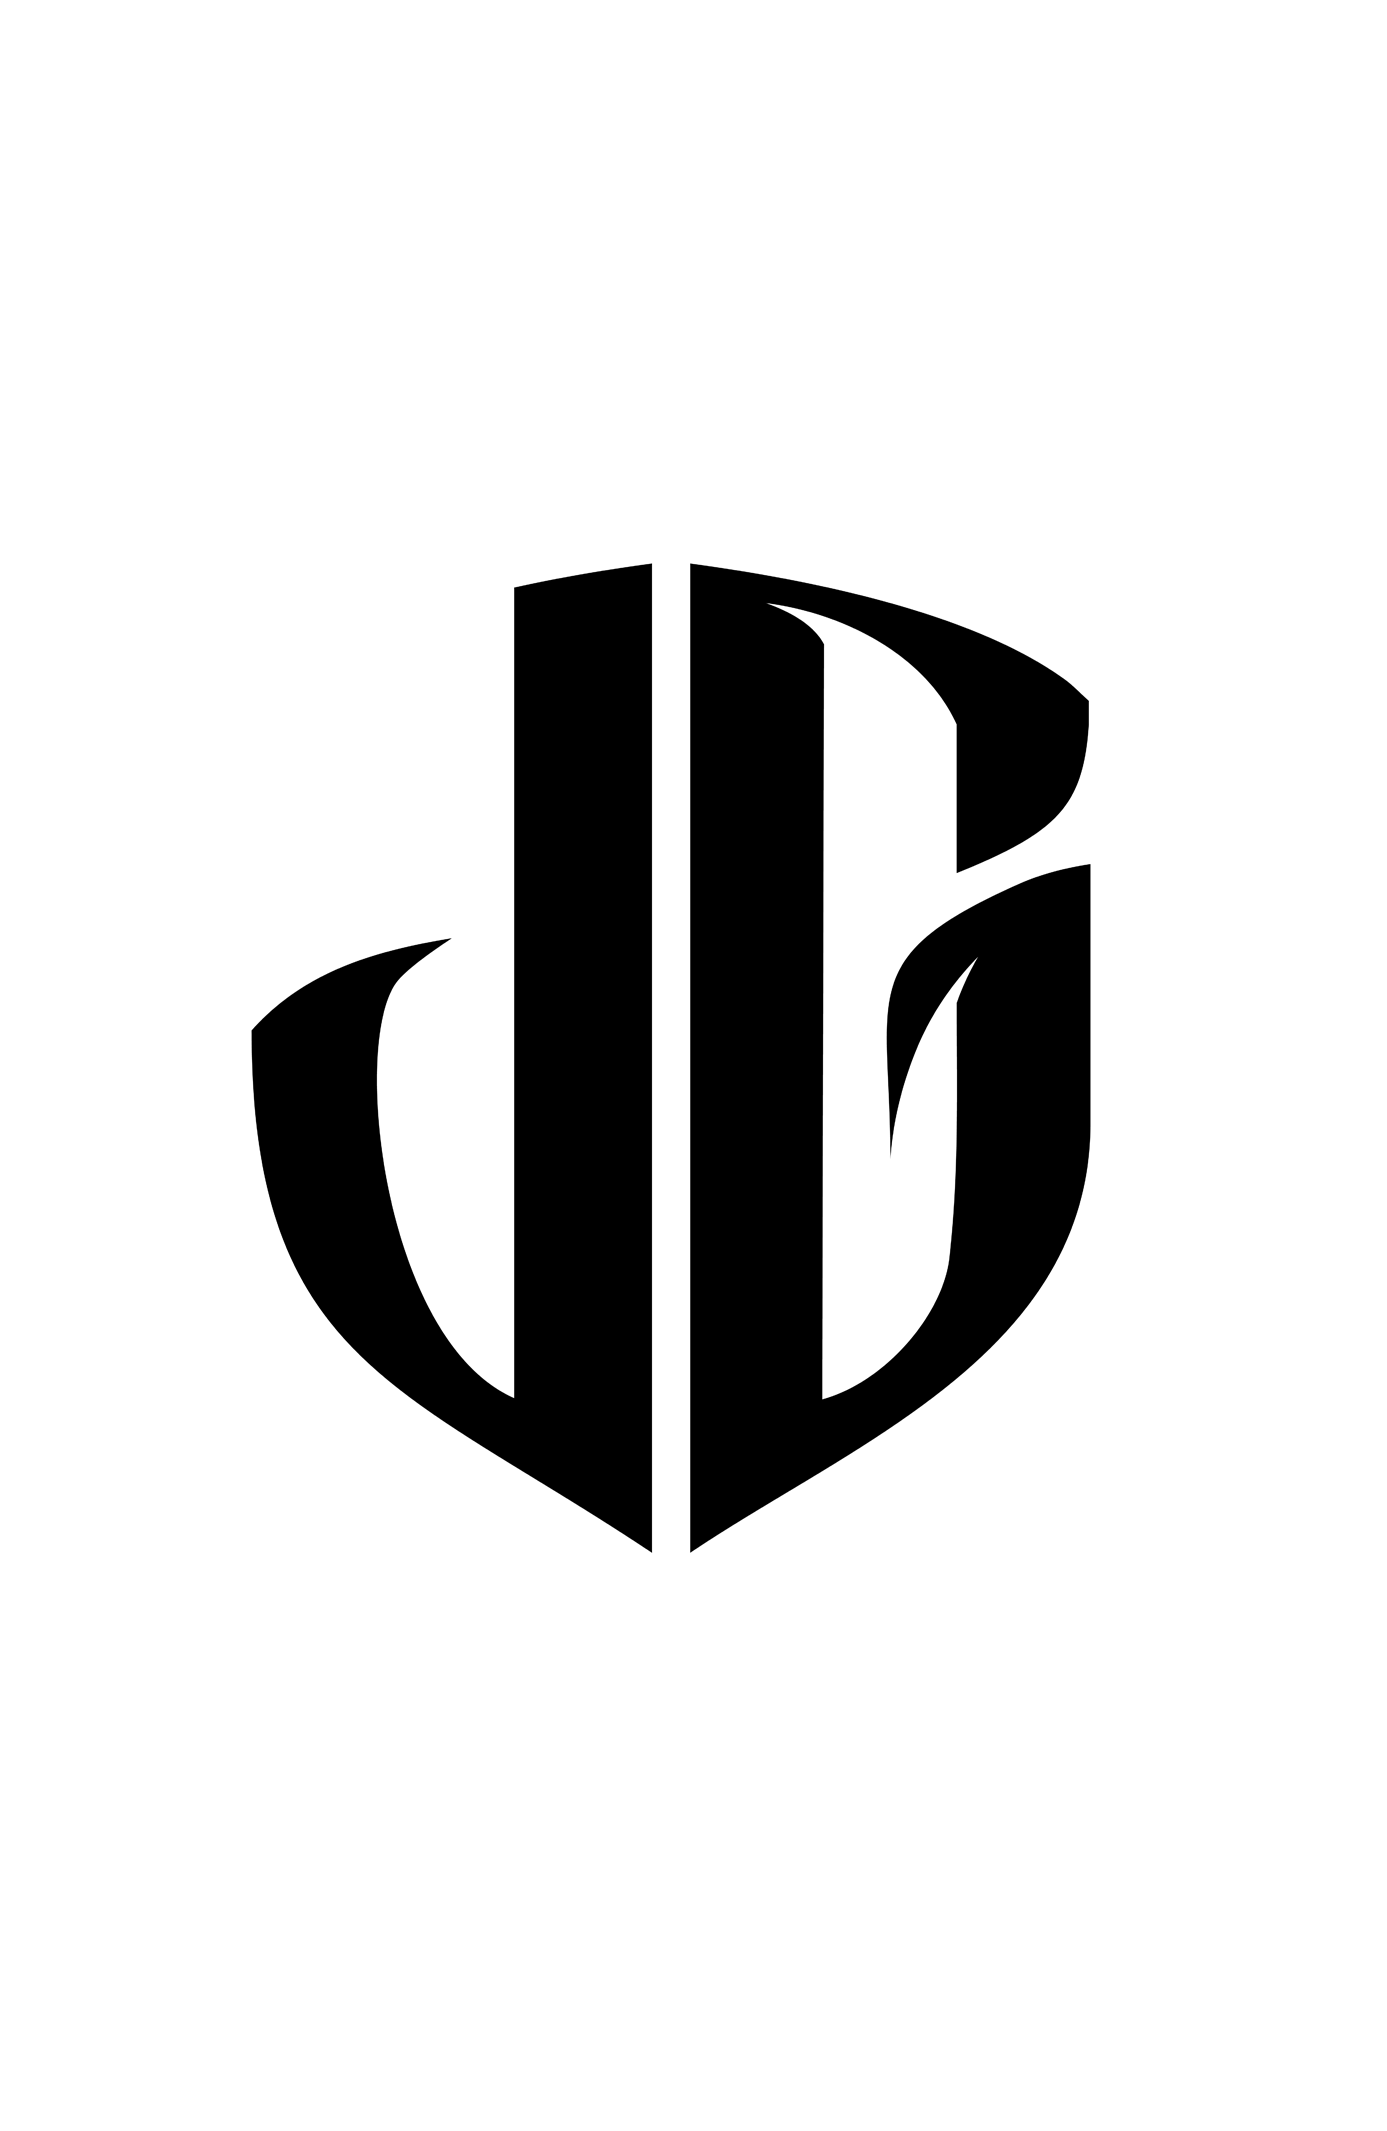 JG Protect logo